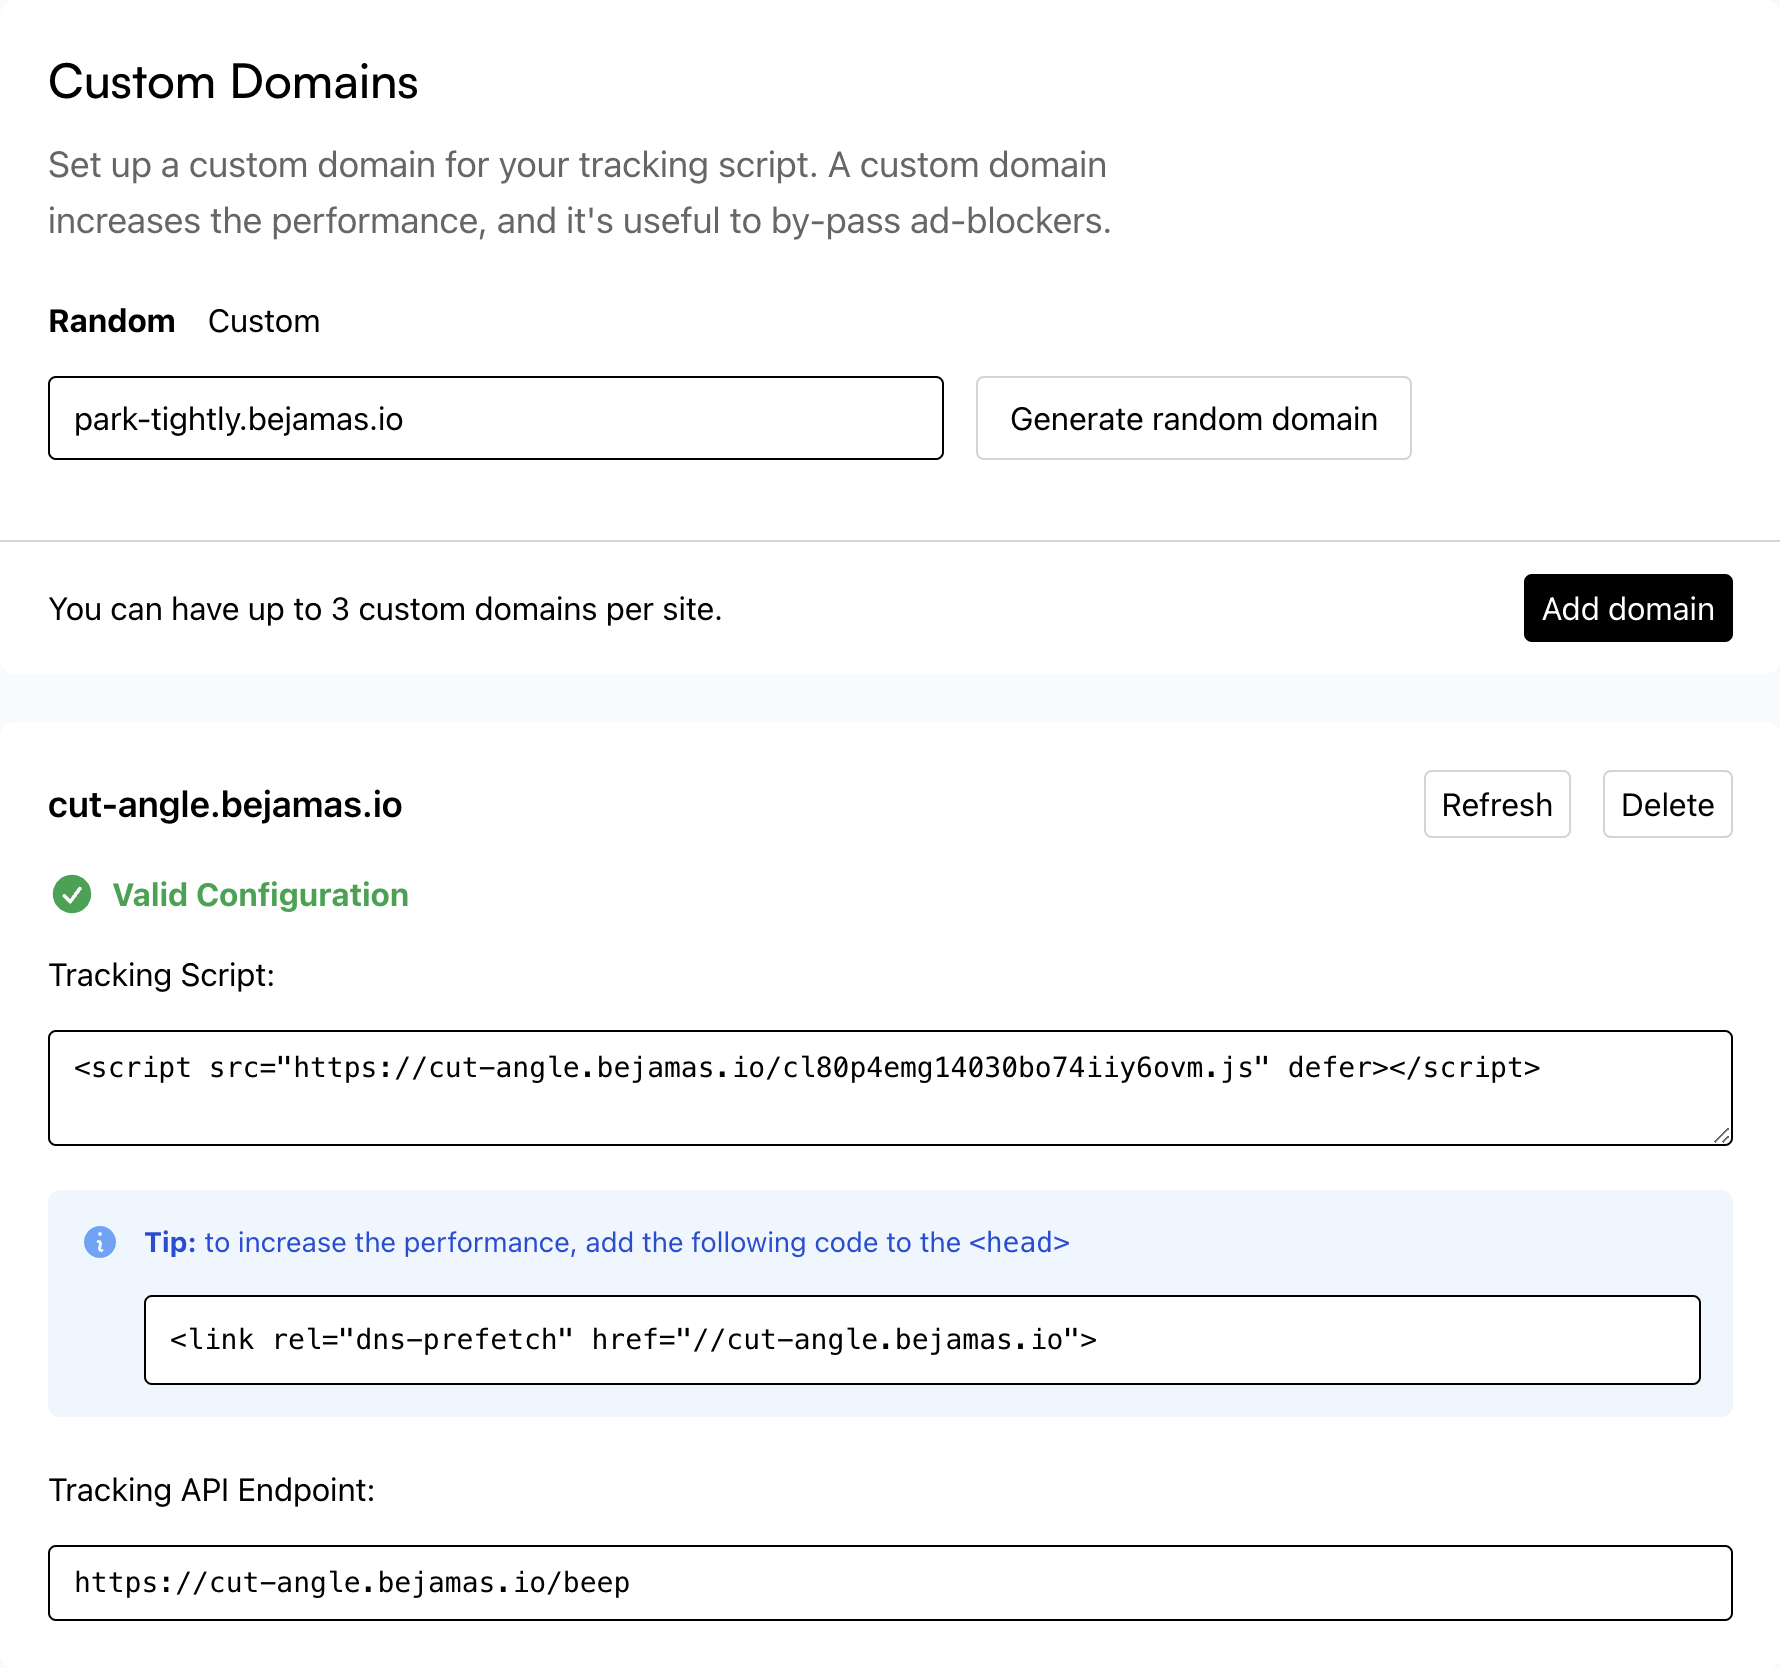 Add custom domain to tracking script